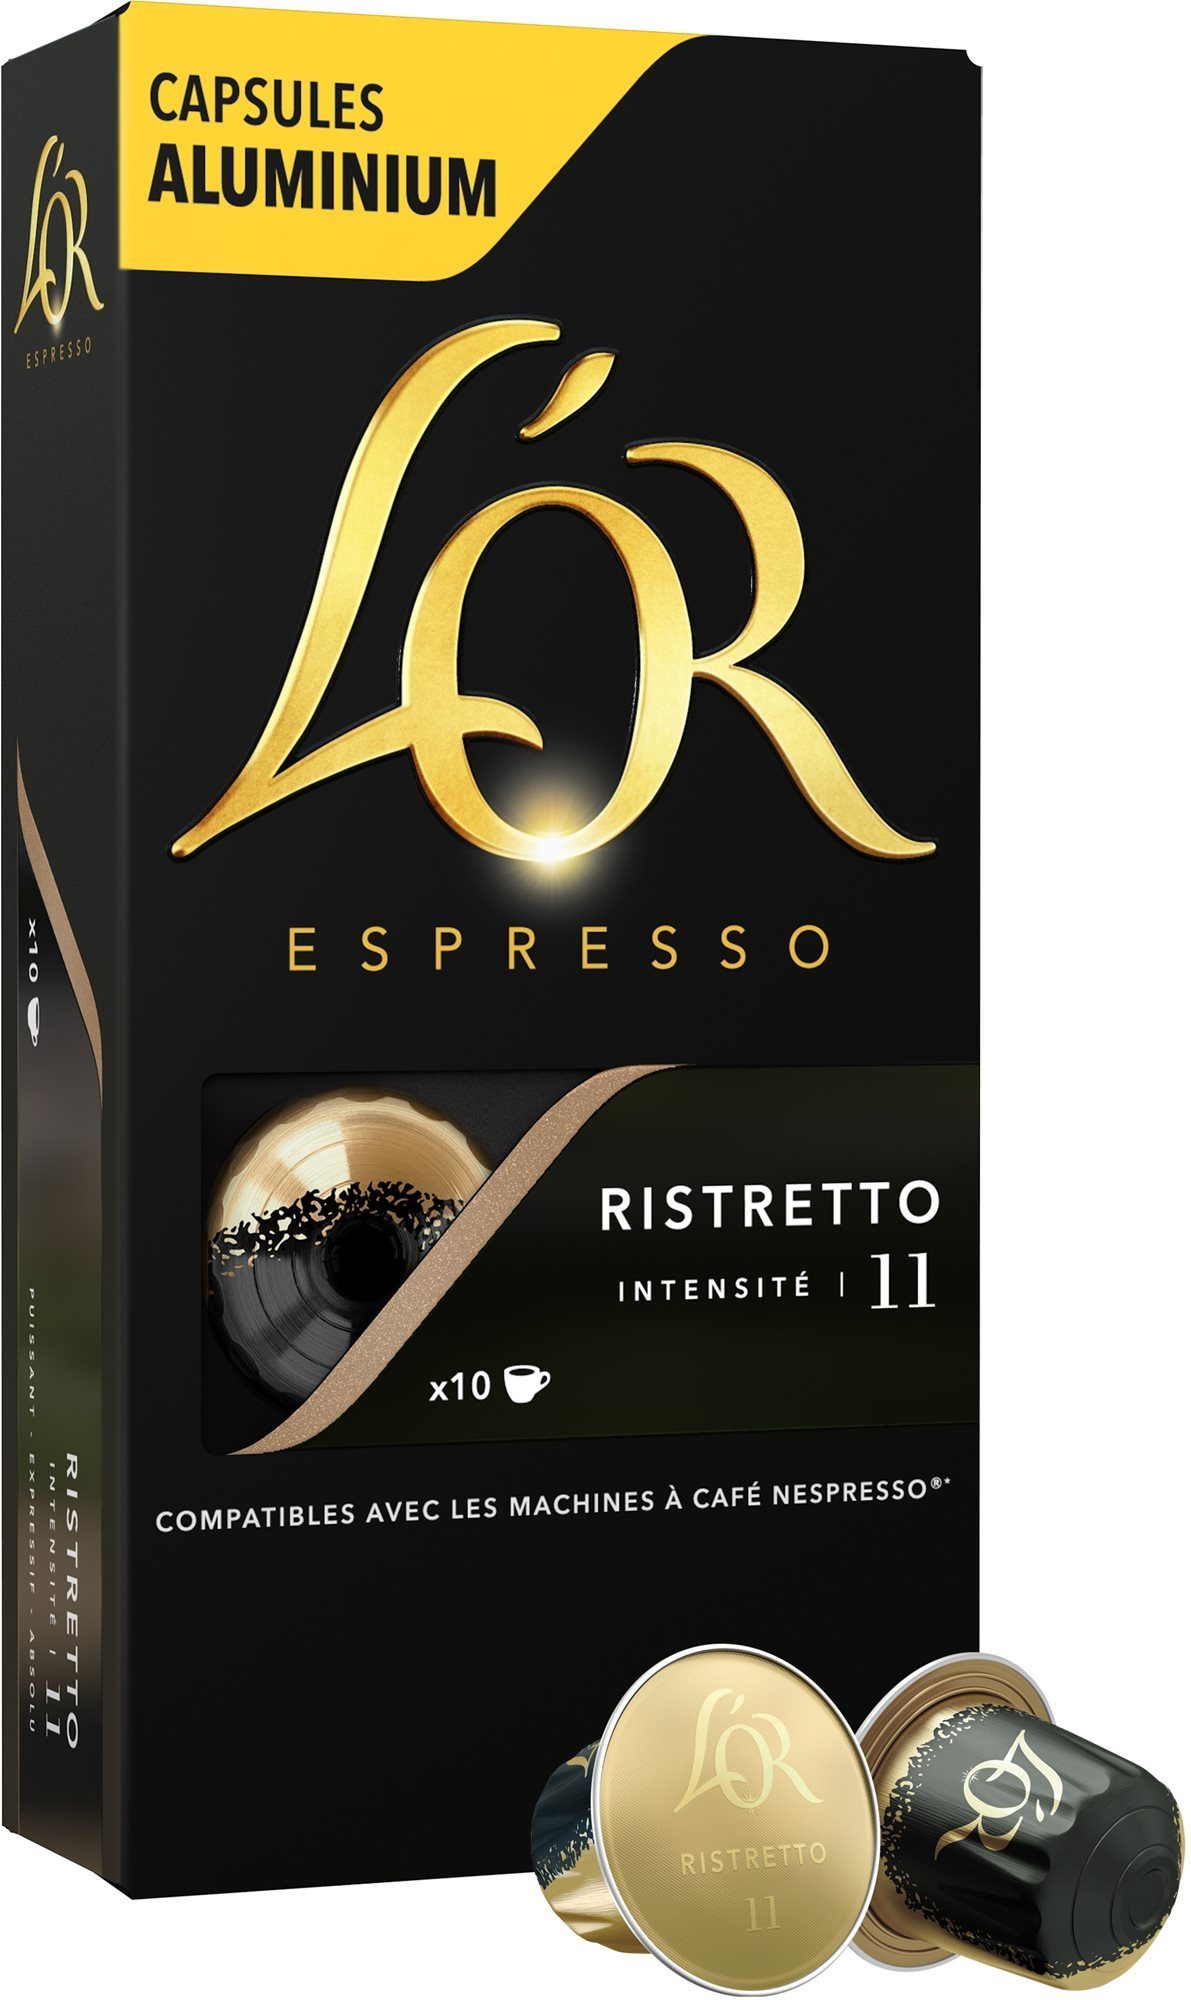 Kávékapszula L'OR Espresso Ristretto 10 db, alumínium